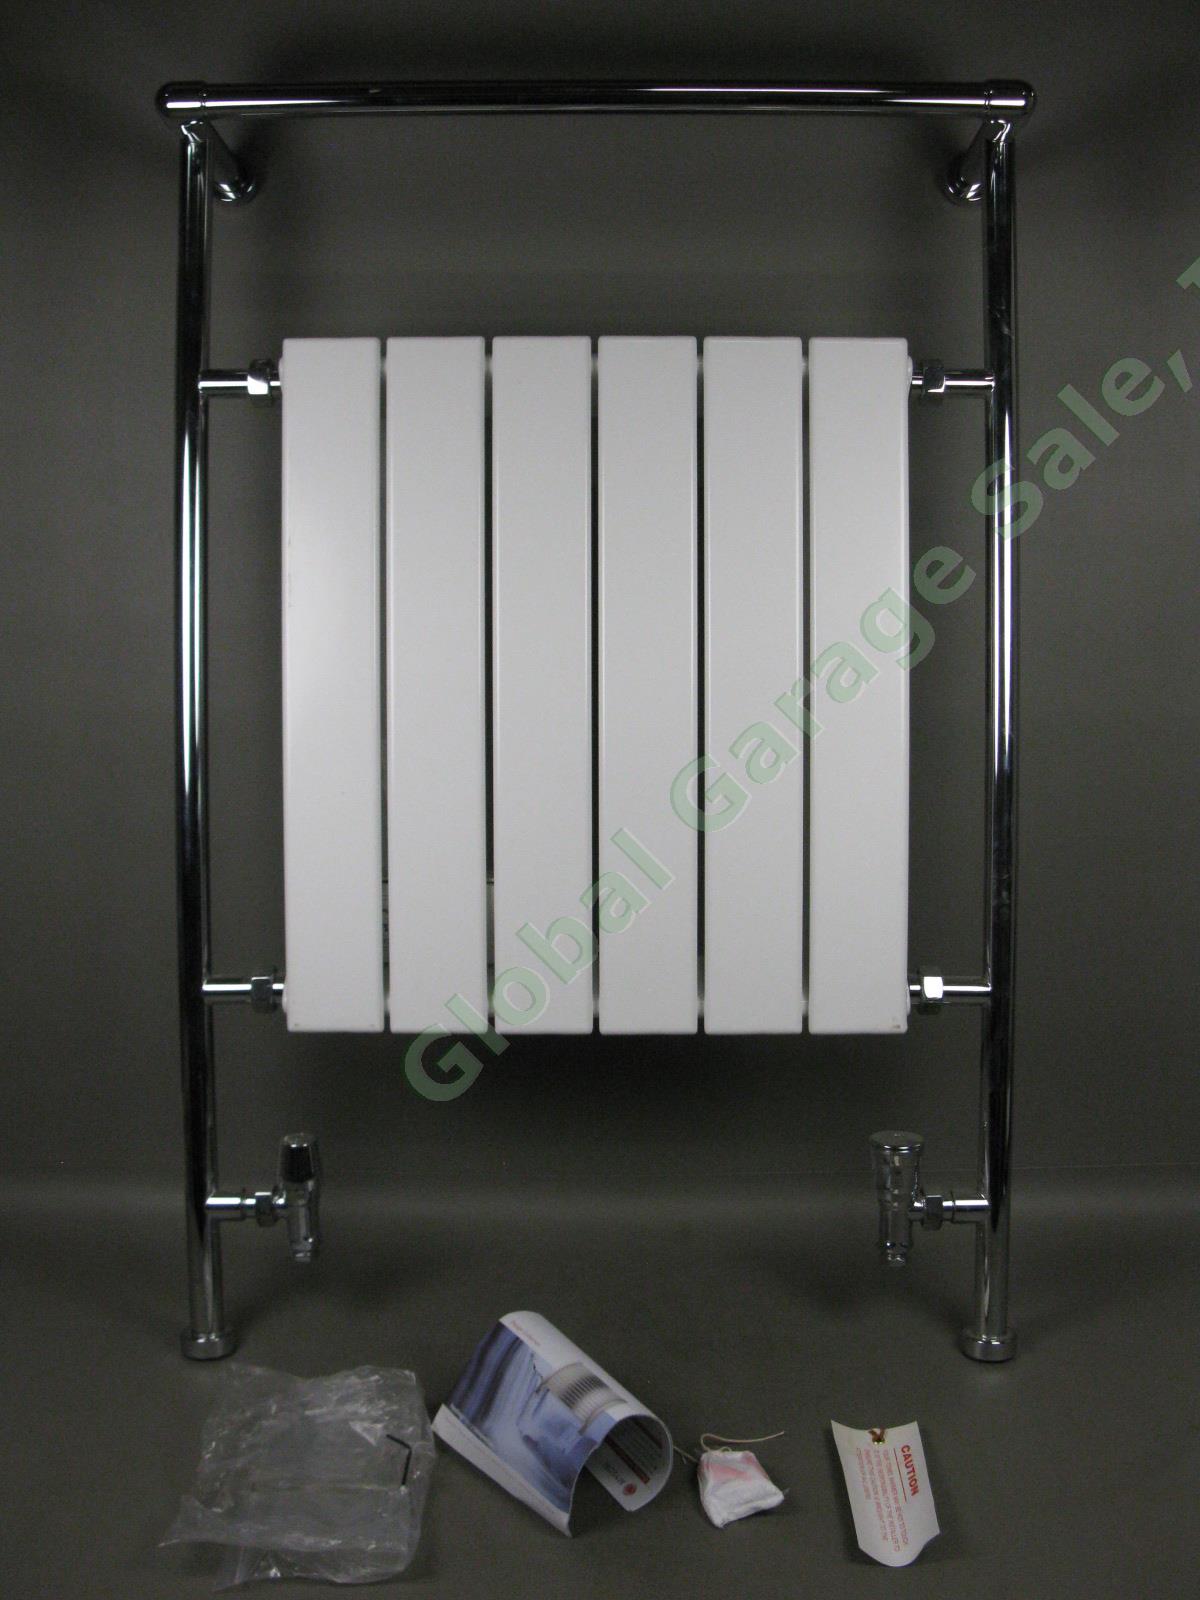 Myson Hydronic Wall Mount Towel Warmer White Model VR1? 2520 BTUH 38" x27" $2515